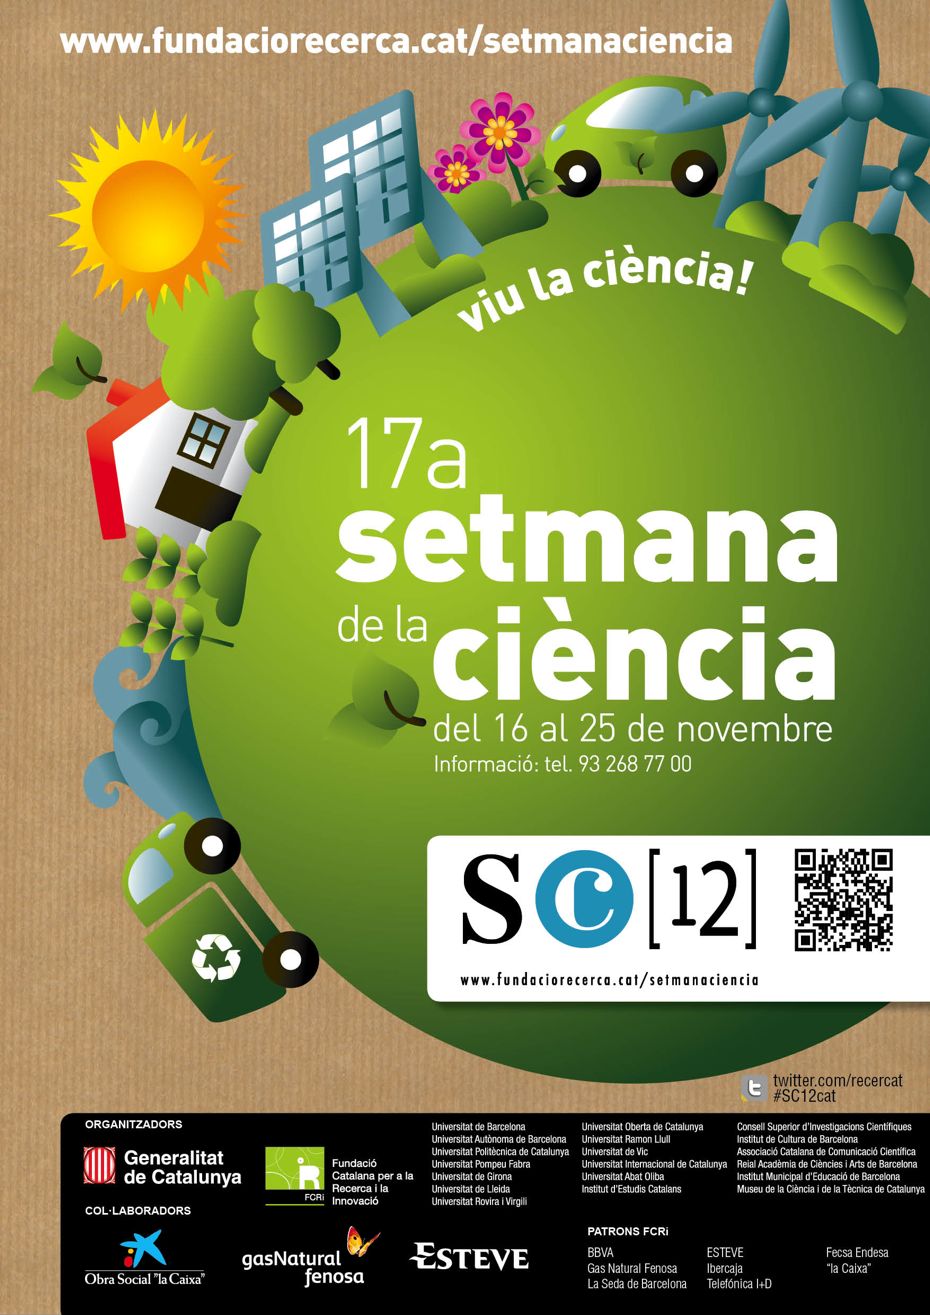 set_ciencia_poster.jpg - 180.62 KB